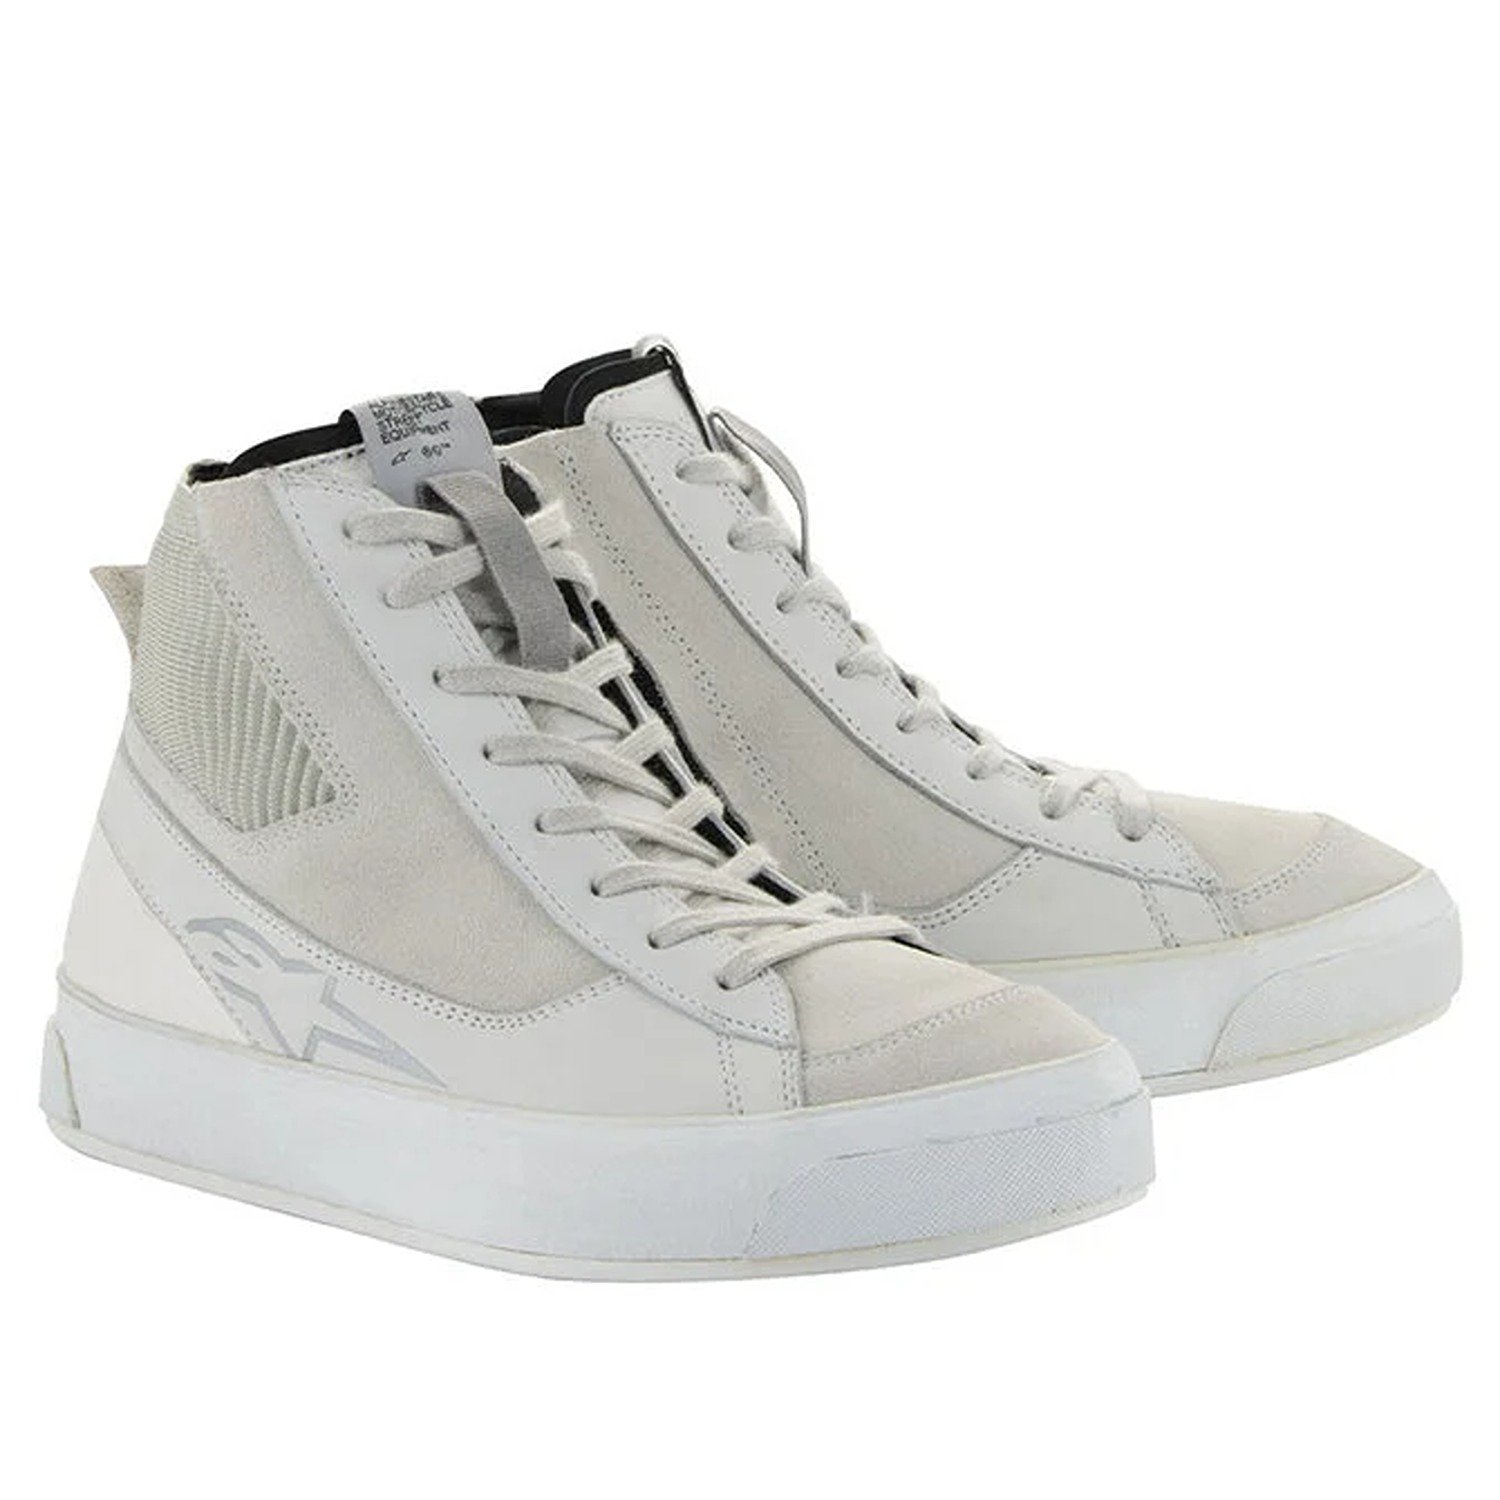 Image of Alpinestars Stella Stated Podium Shoes White Cool Gray Size US 85 EN